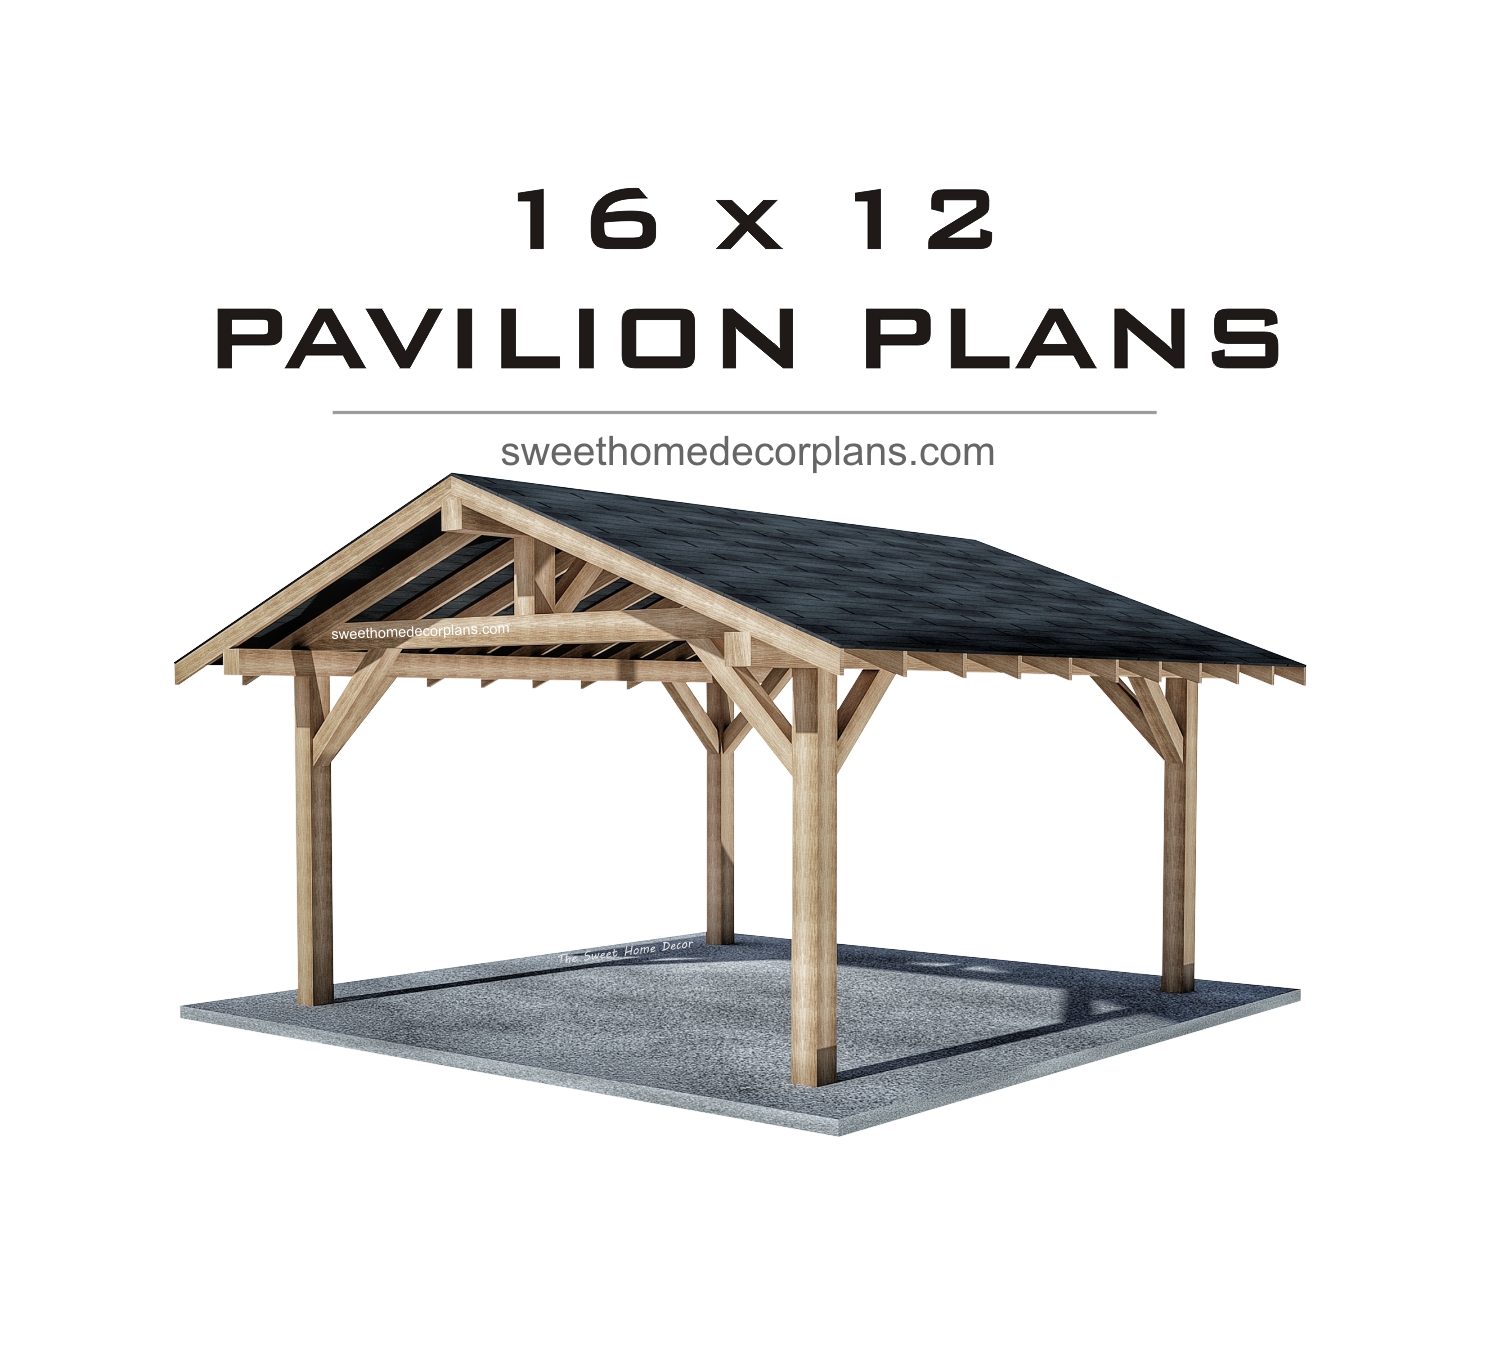 Diy-16-х-12-gable-pavilion-plans-carport-patio-gazebo-pdf